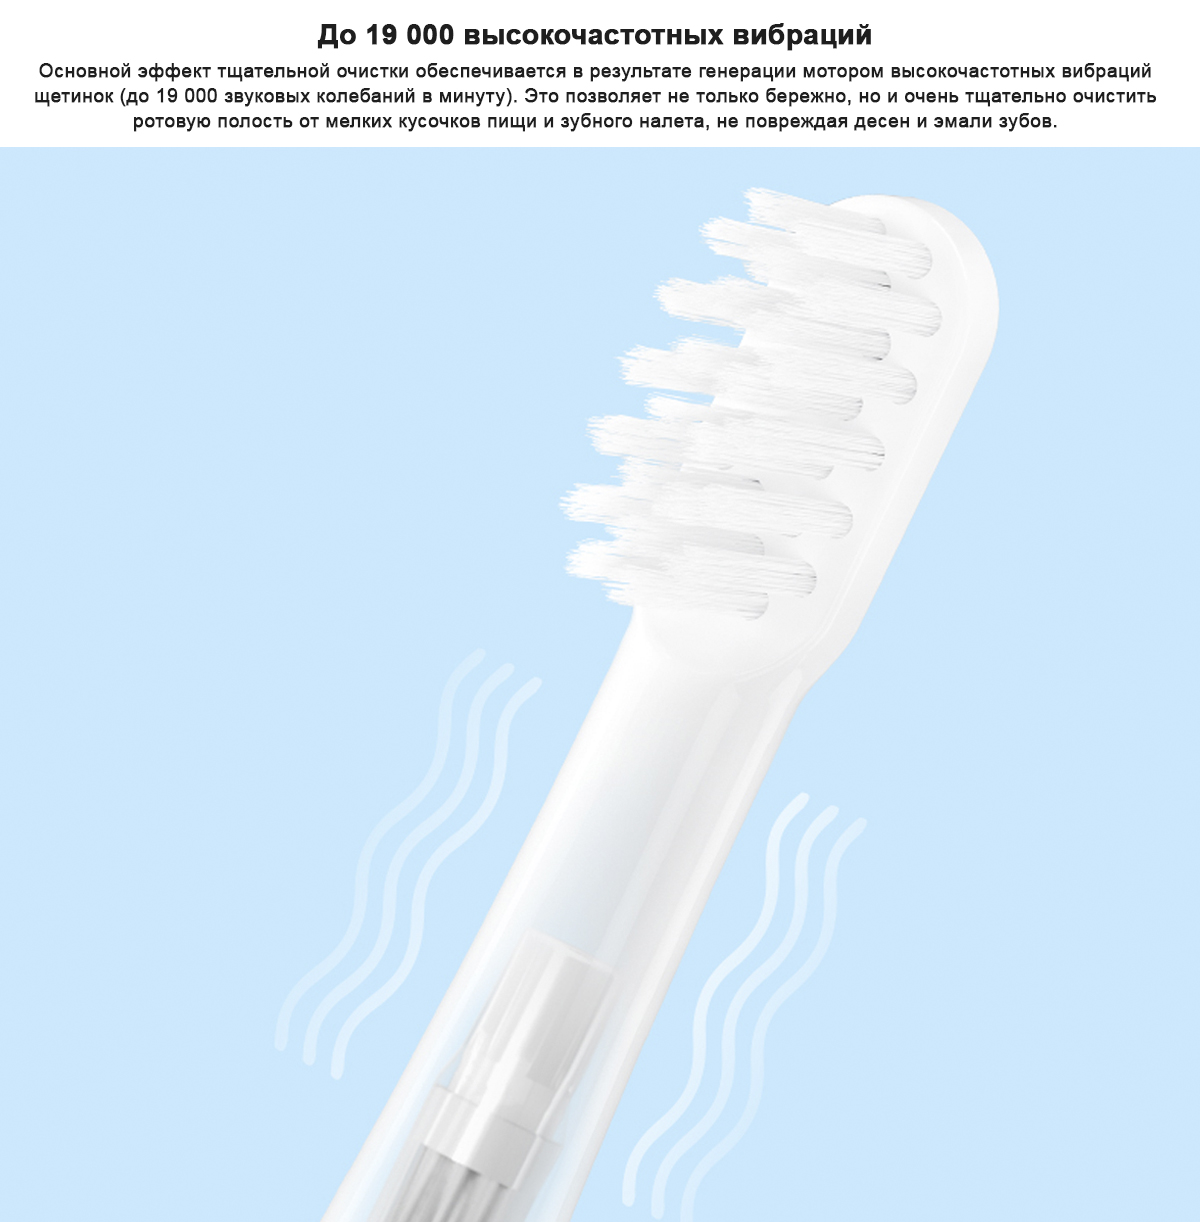 Электрическая зубная щетка Infly Sonic Electric Toothbrush P60